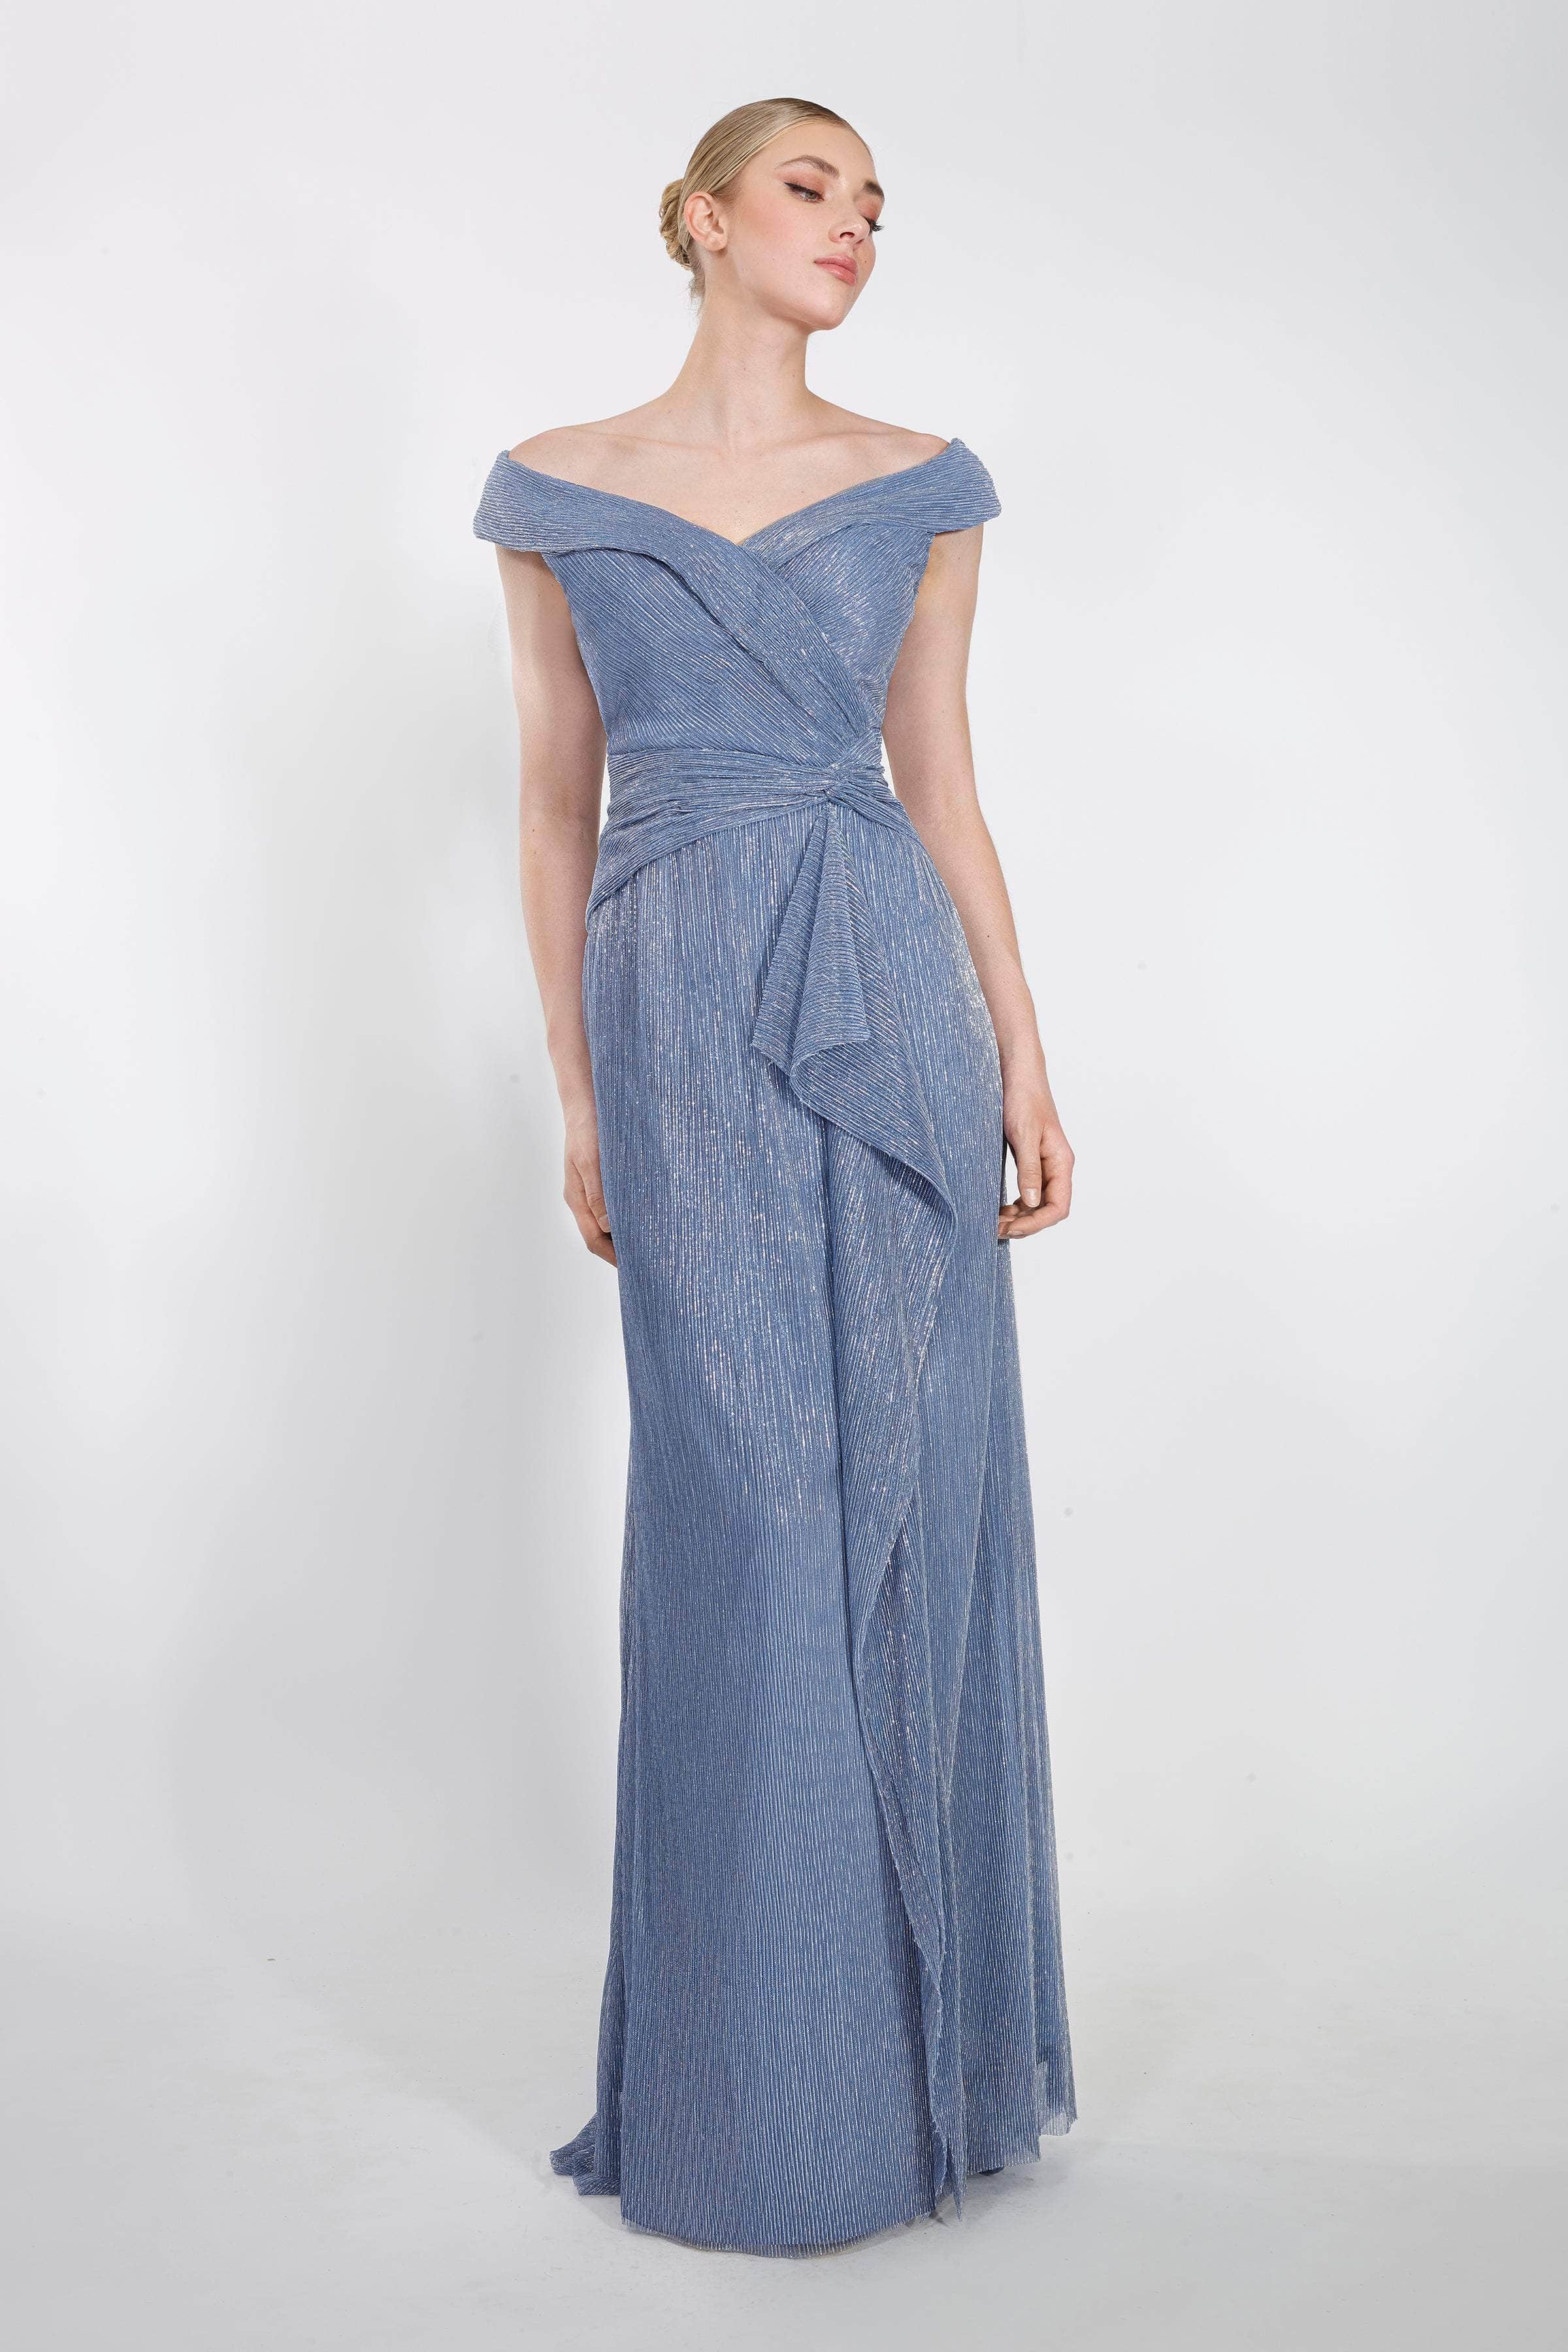 Janique 210622 - Cap Sleeve V-neck Evening Dress
